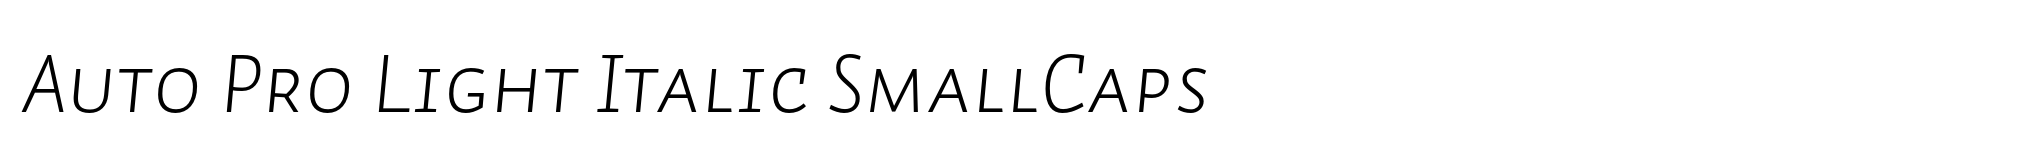 Auto Pro Light Italic SmallCaps image